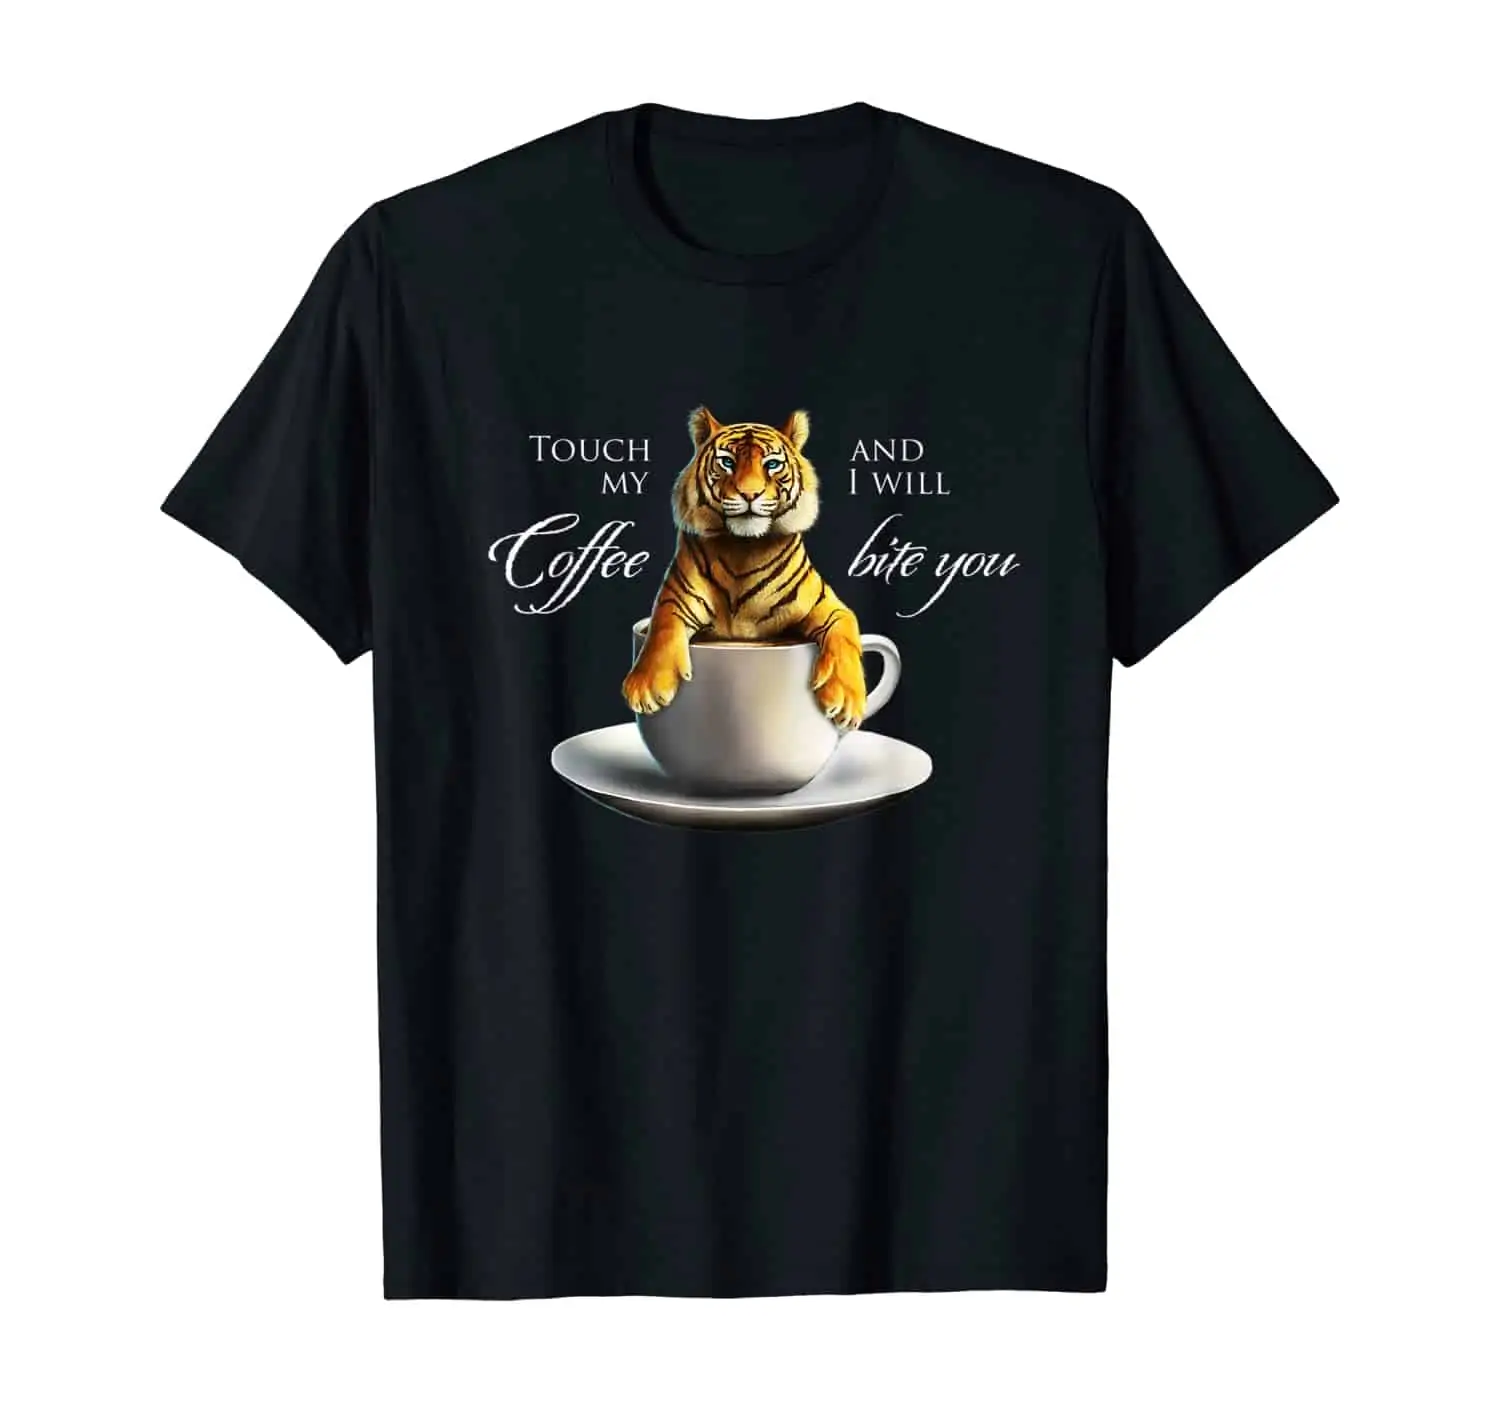 Tiger, Katze, Großkatze, Kaffee Trinker, Kaffee Liebhaber, Morgenmuffel, Kaffeetrinker, Kaffee Spruch T-Shirt Design